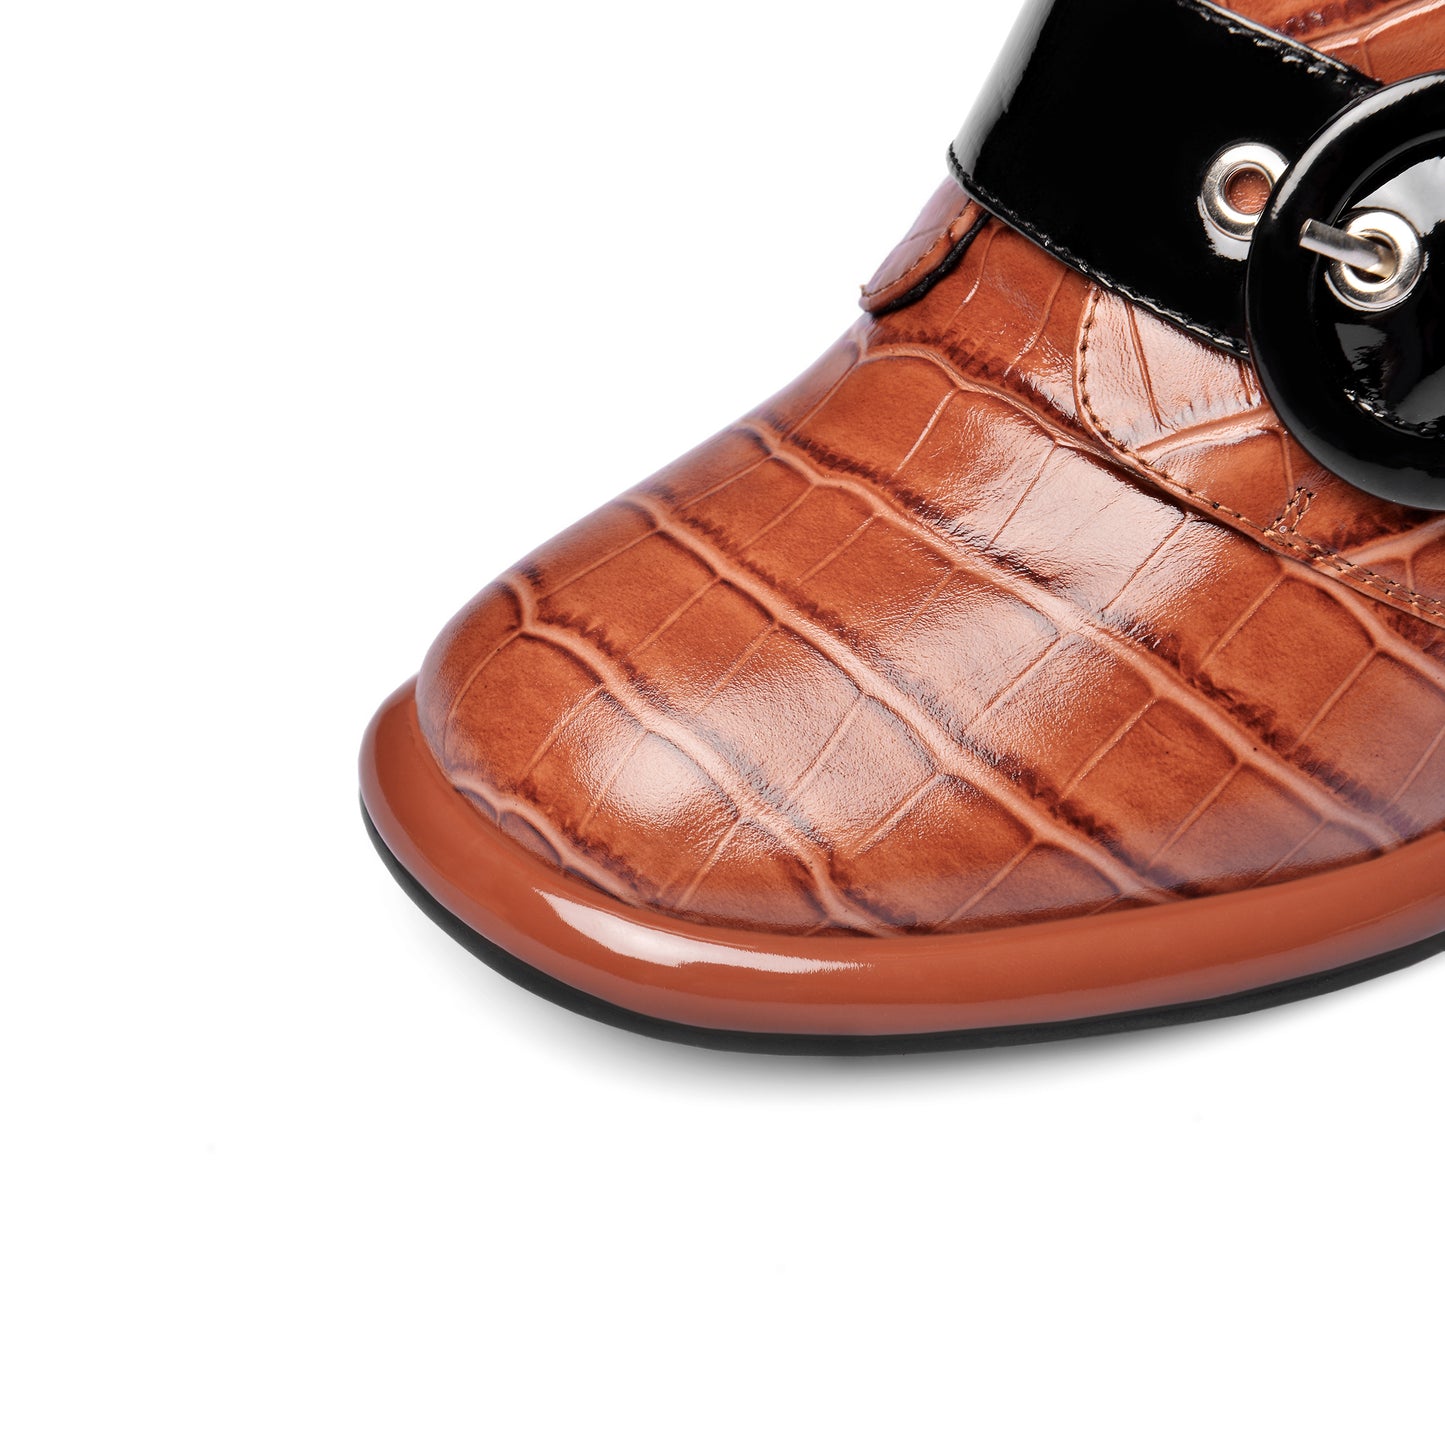 TinaCus Women's Handmade Genuine Leather Round Toe Buckled Trendy Platform High Chunky Heel Slip On Pumps